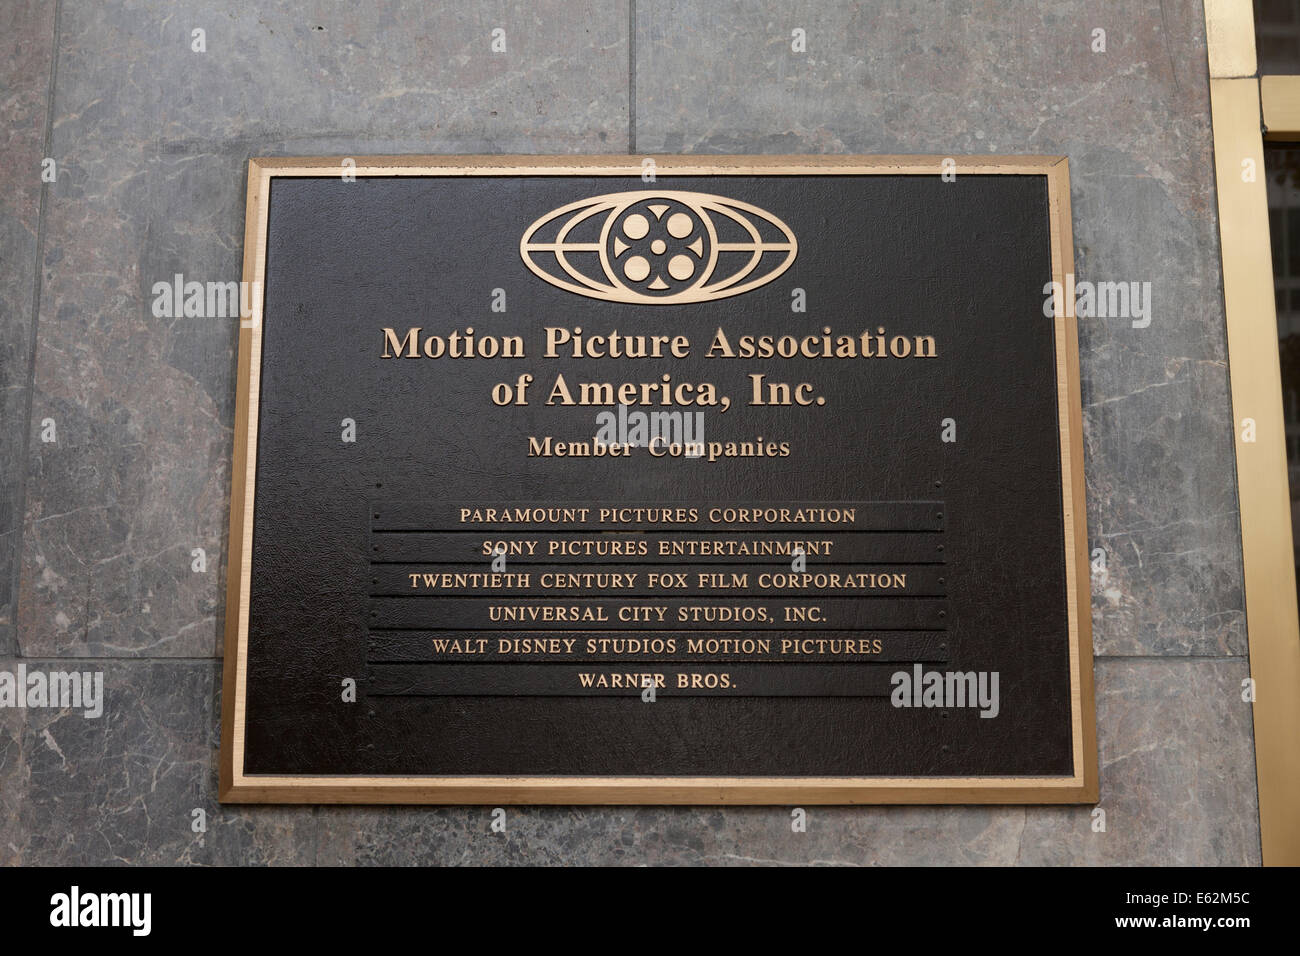 Motion Picture Association of America headquarters - Washington, DC USA Stock Photo